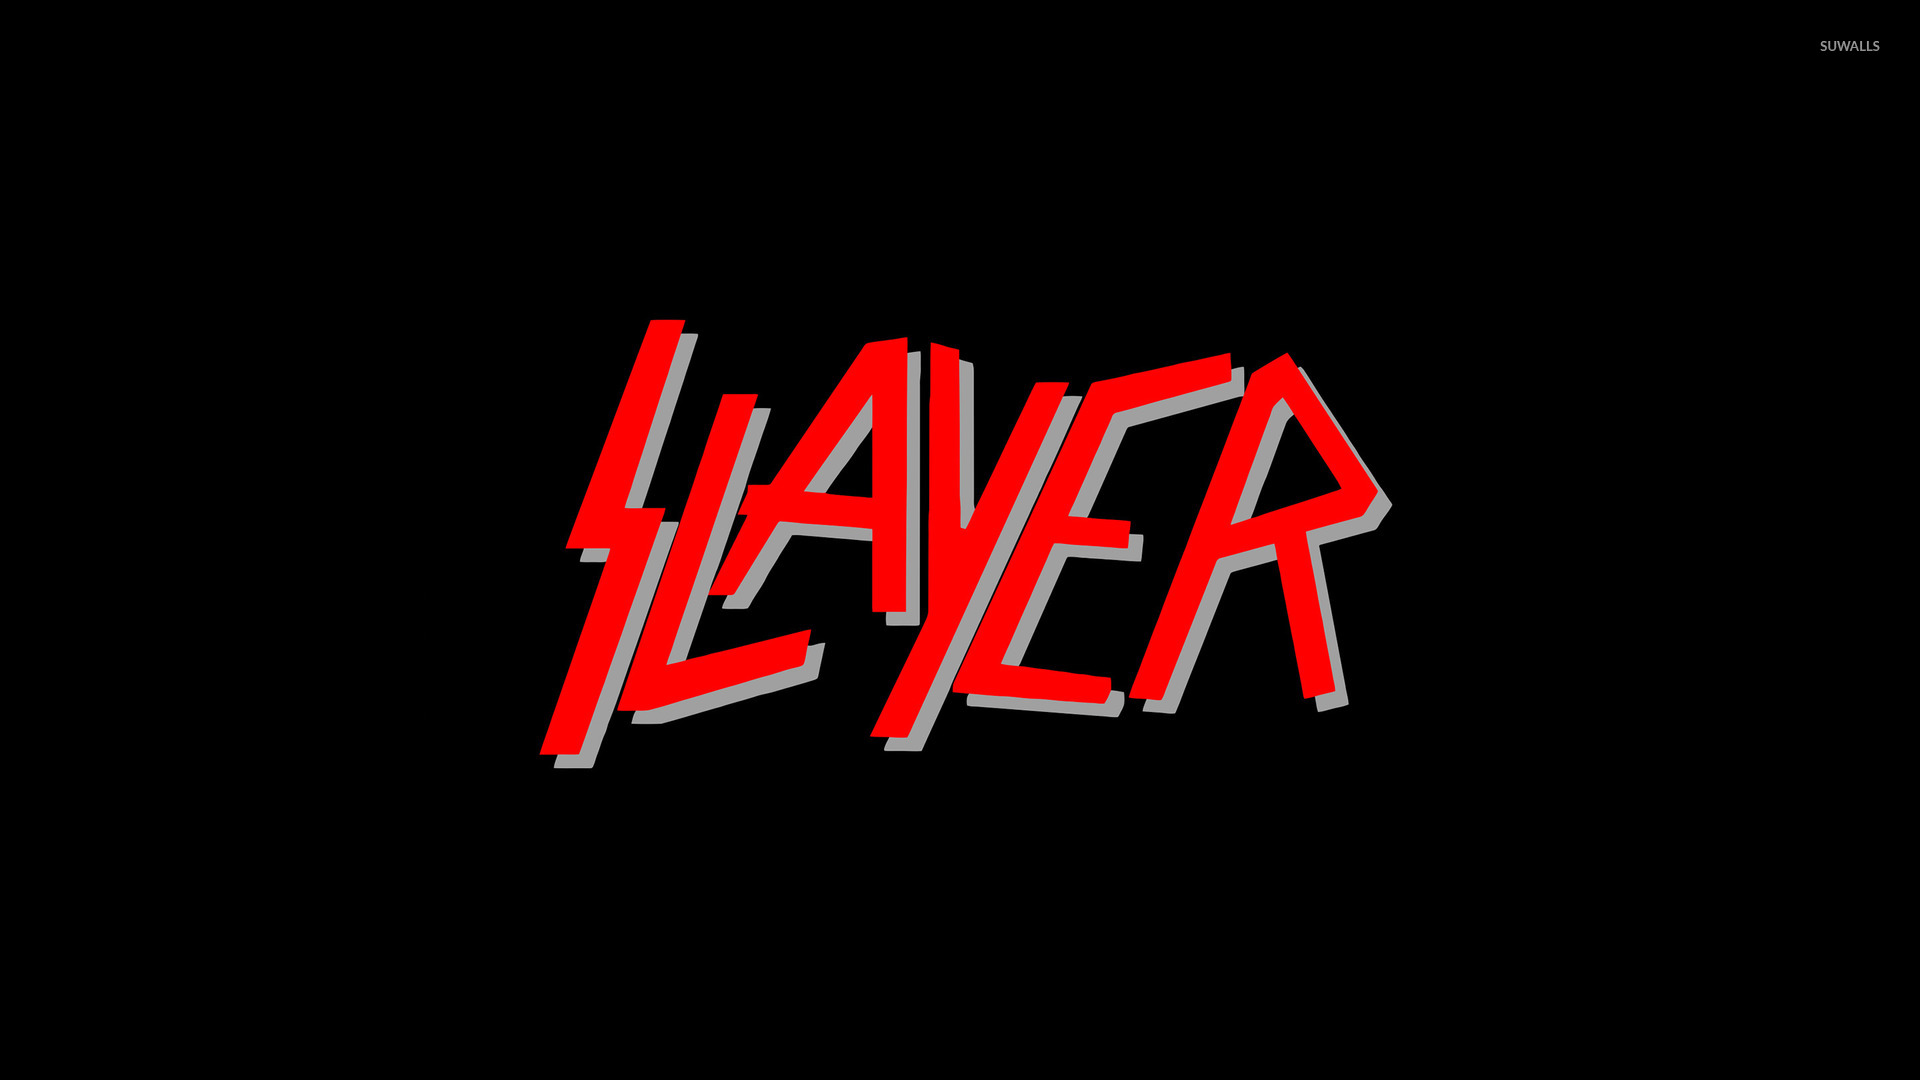 Slayer wallpaper 1920x1080